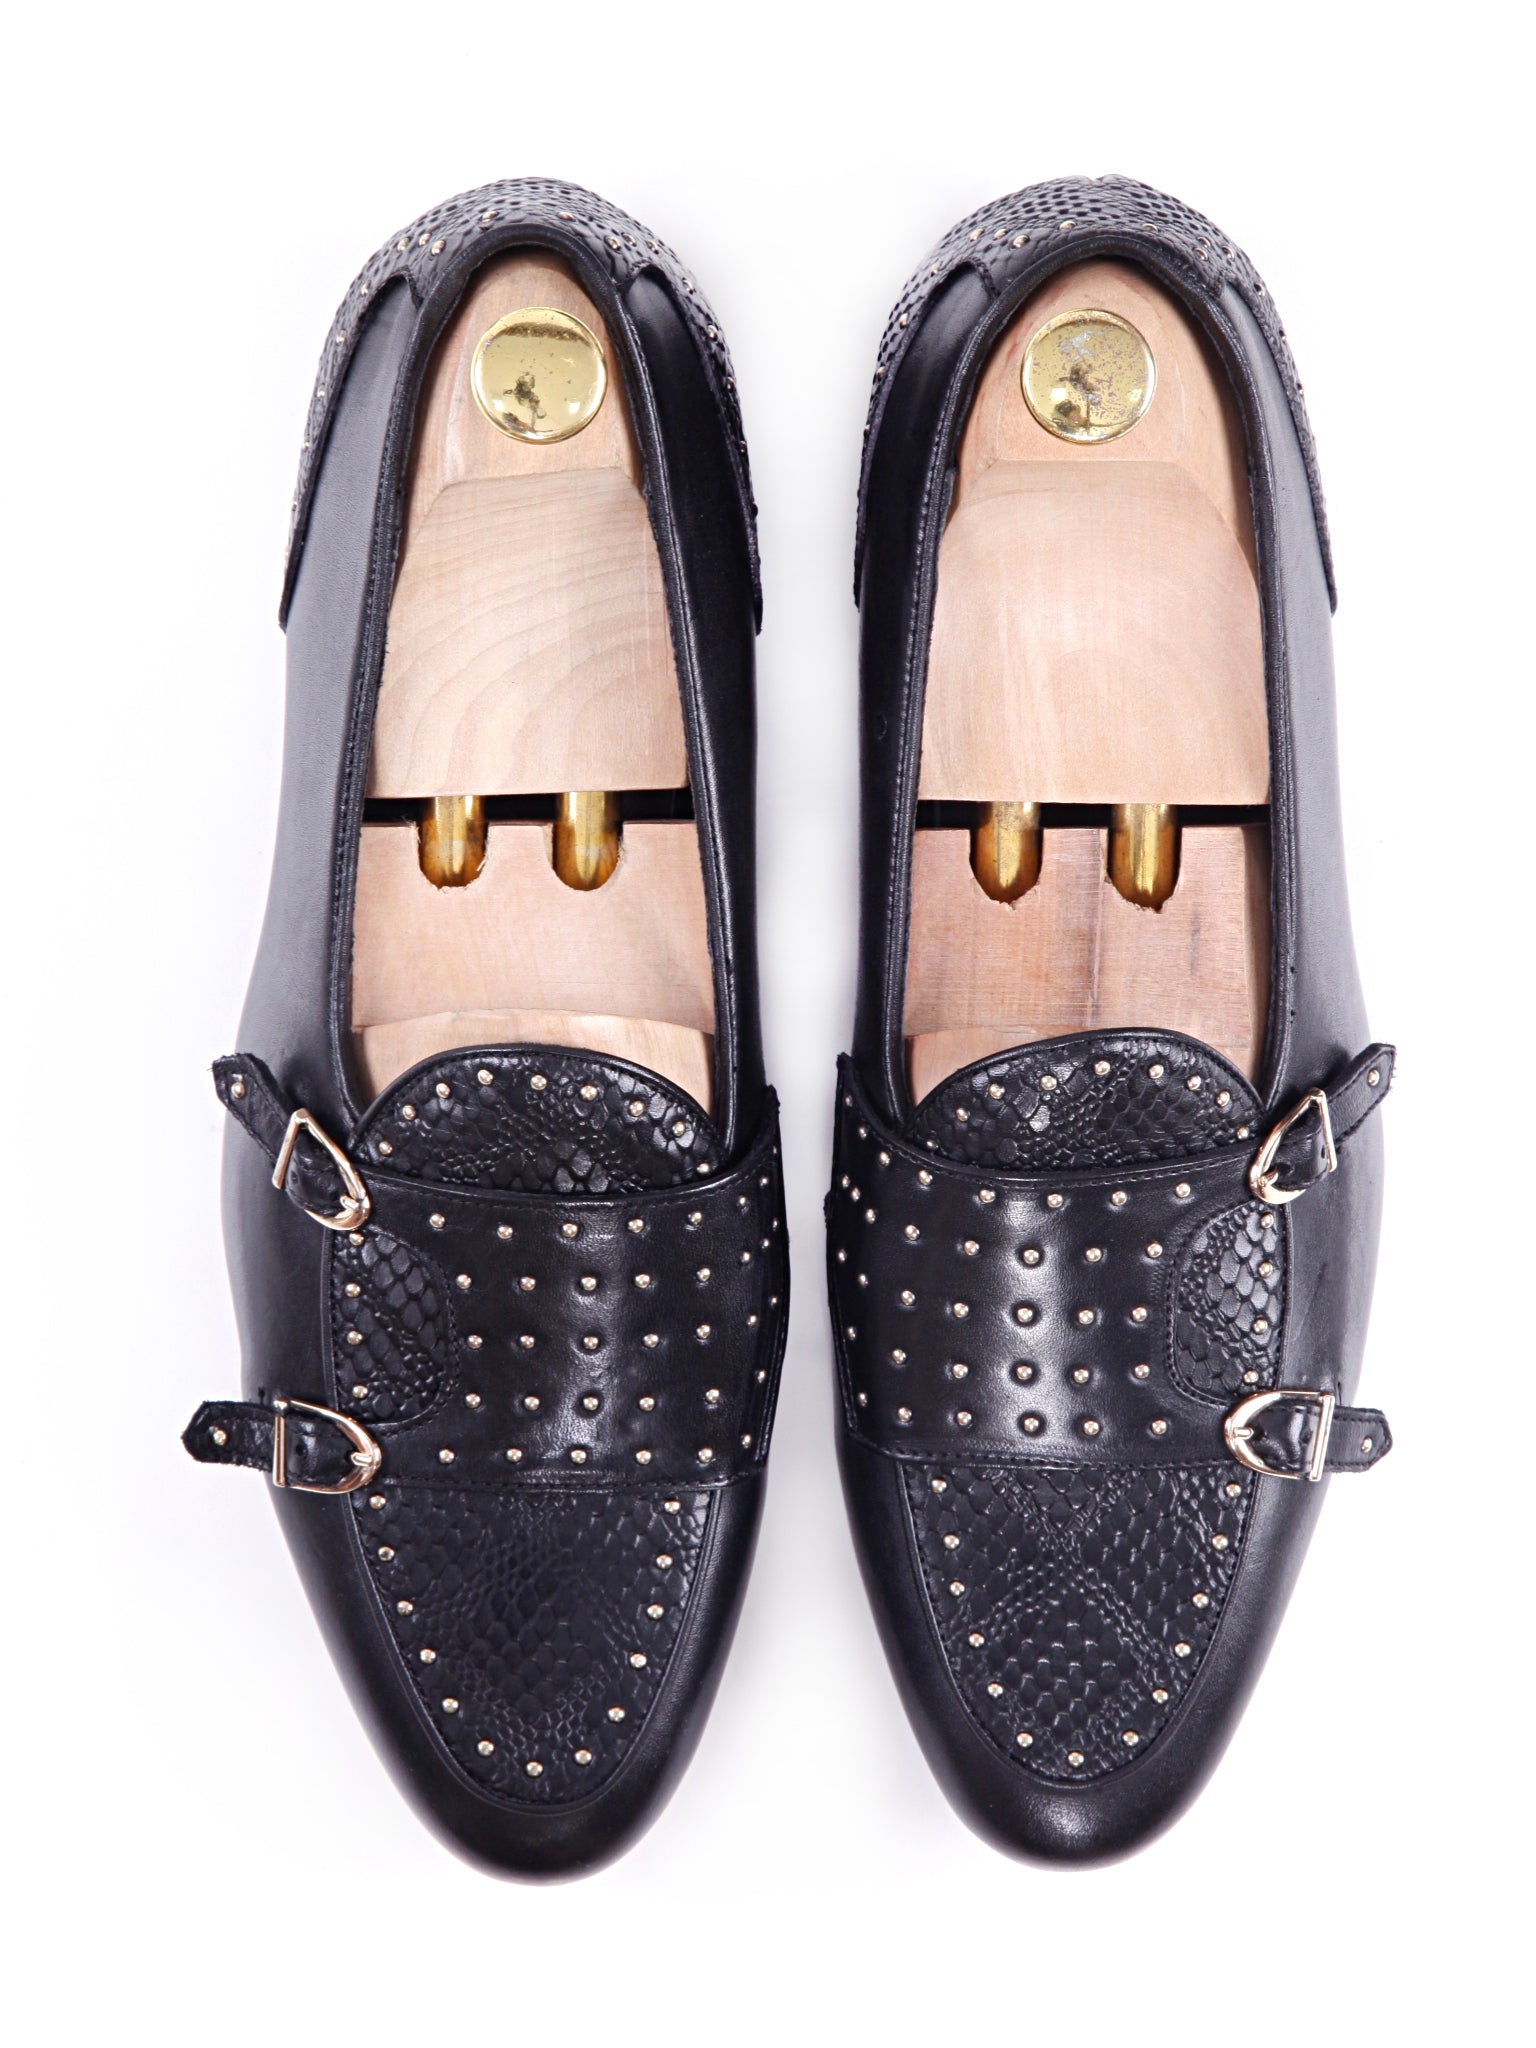 Belgian Loafer - Black Snake Skin Double Monk Strap with Studded - Zeve Shoes